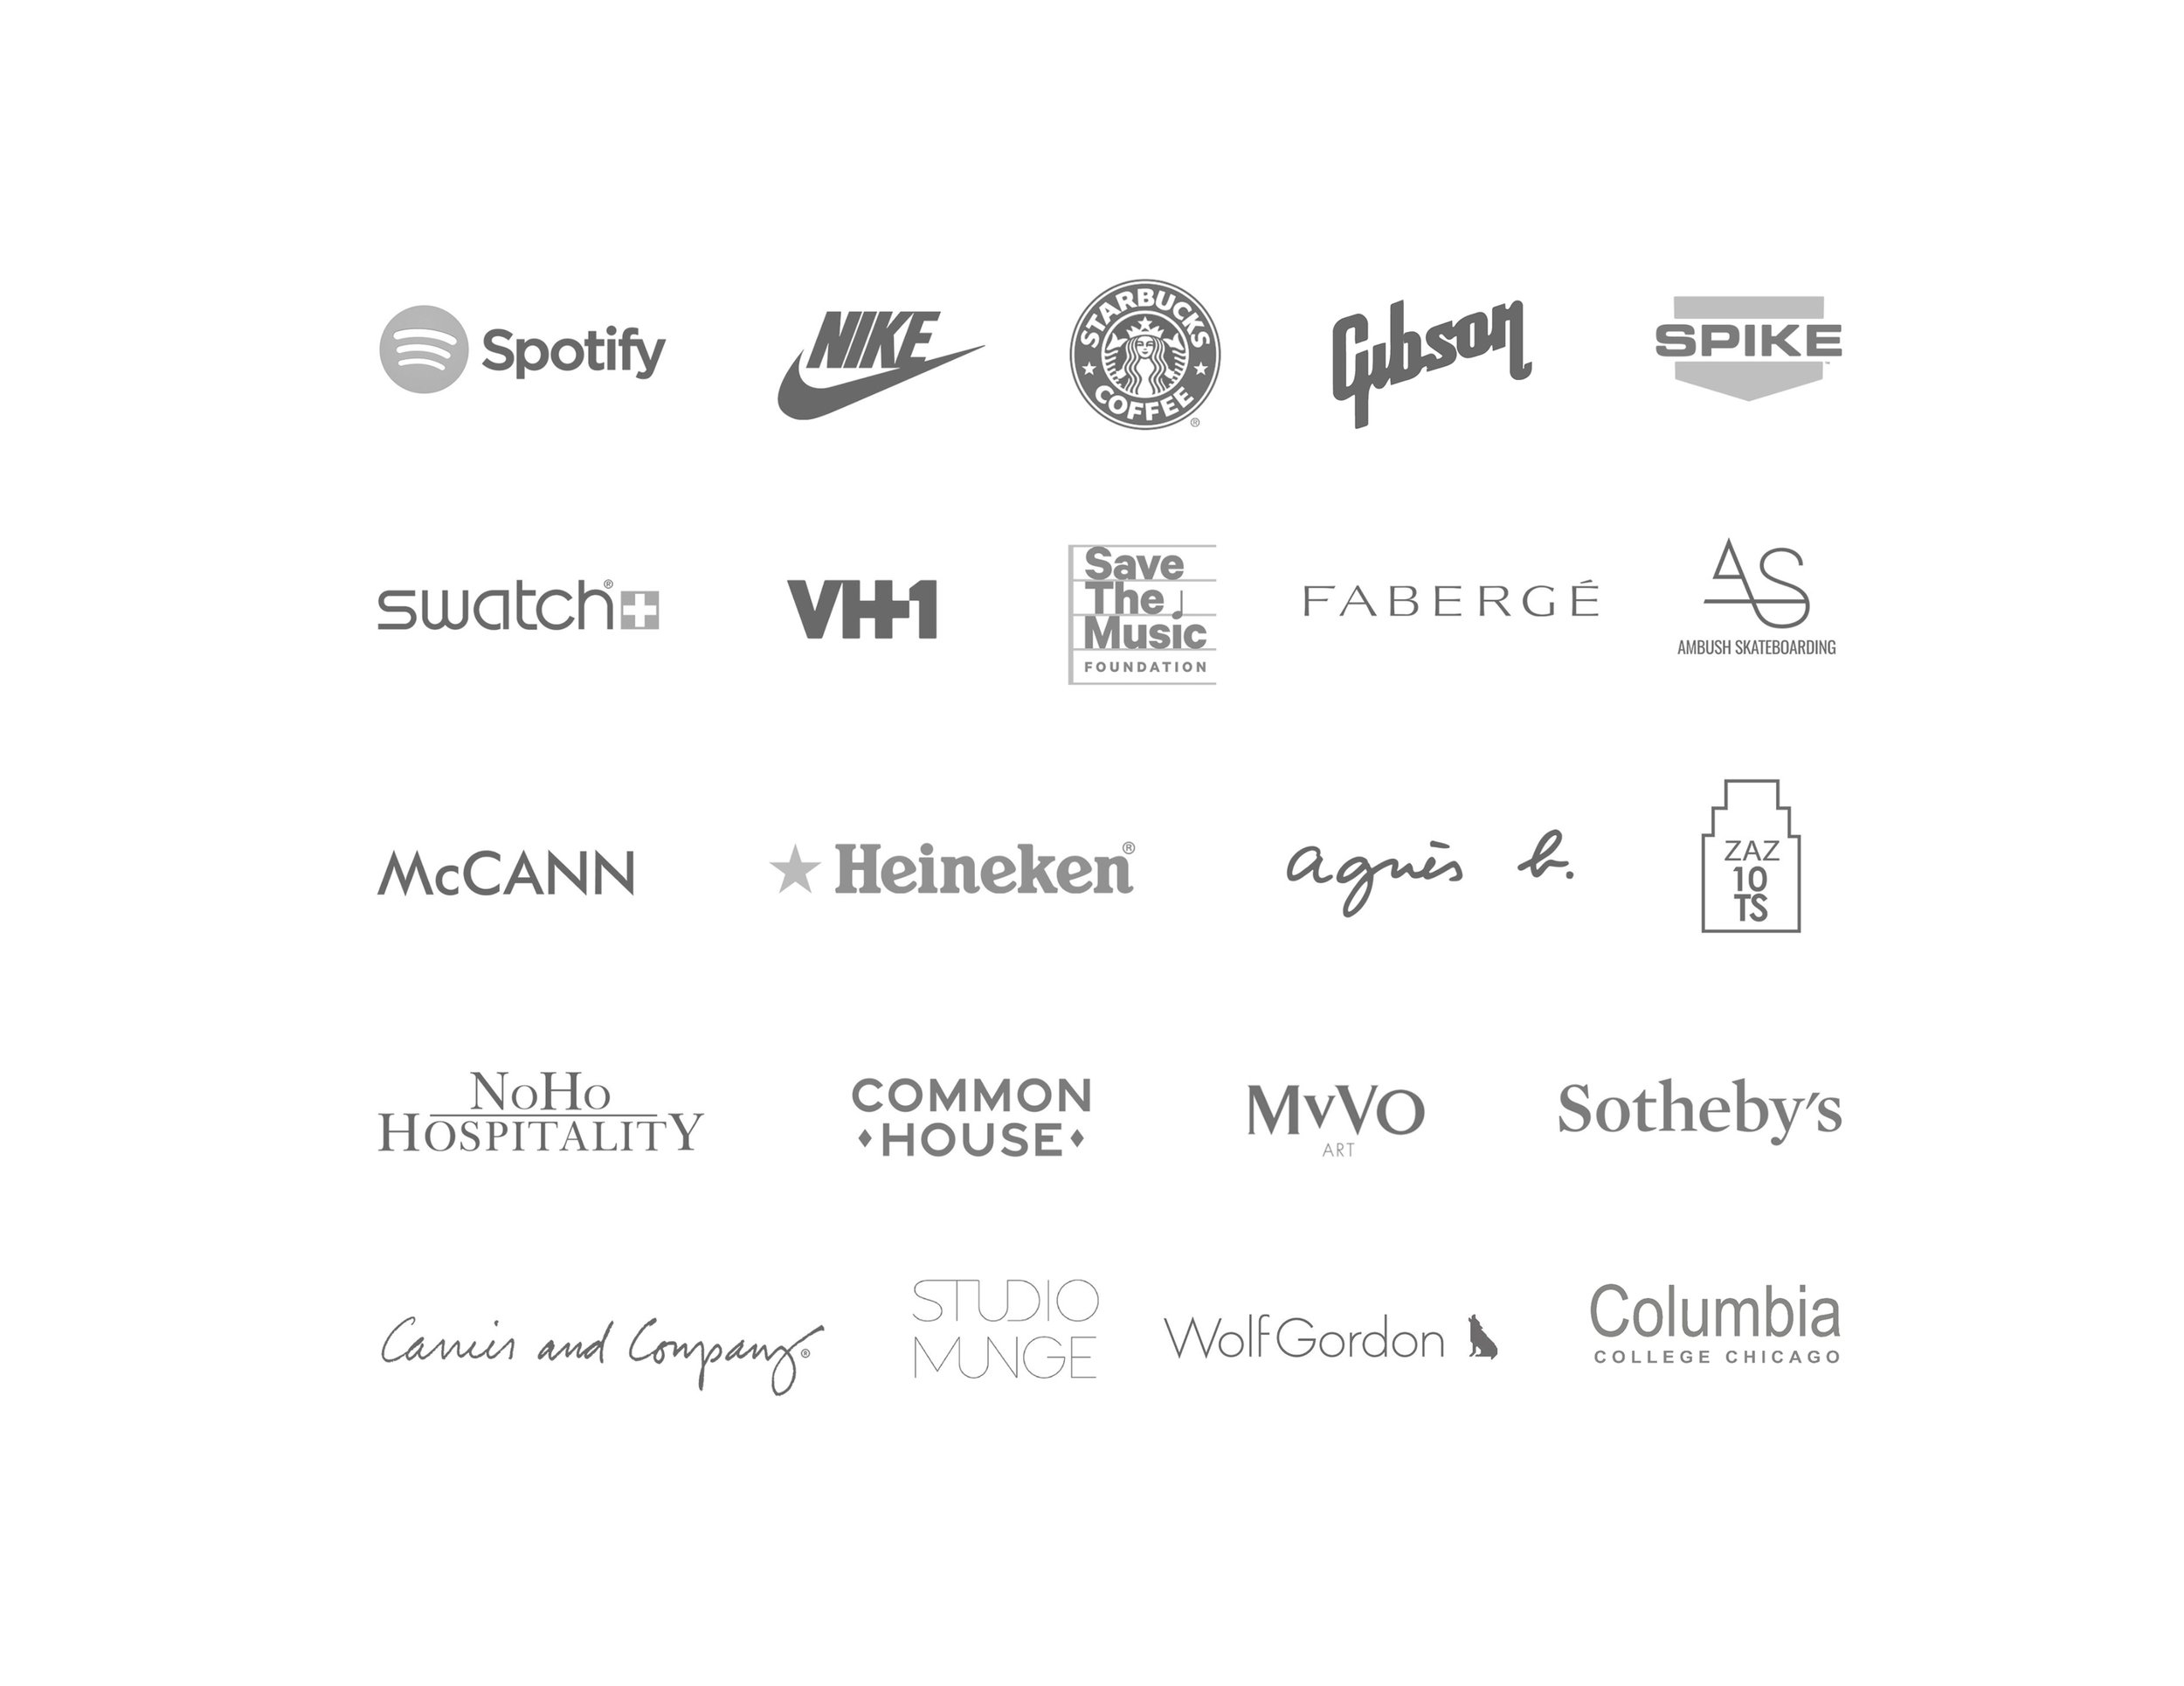 Brand Collaborations